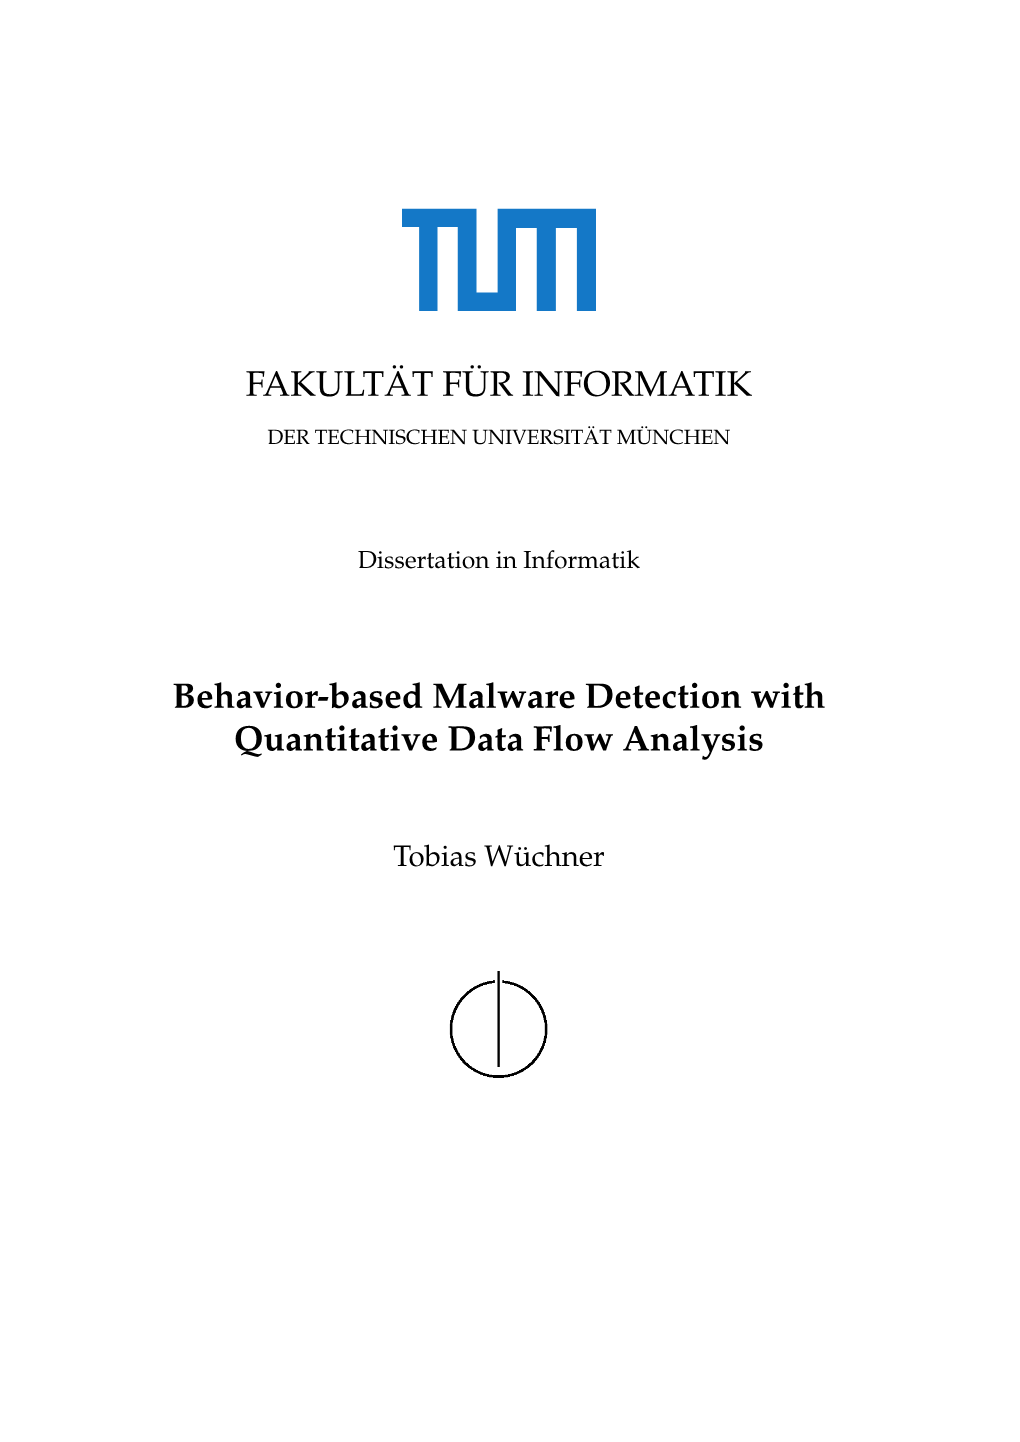 FAKULT¨AT F¨UR INFORMATIK Behavior-Based Malware Detection